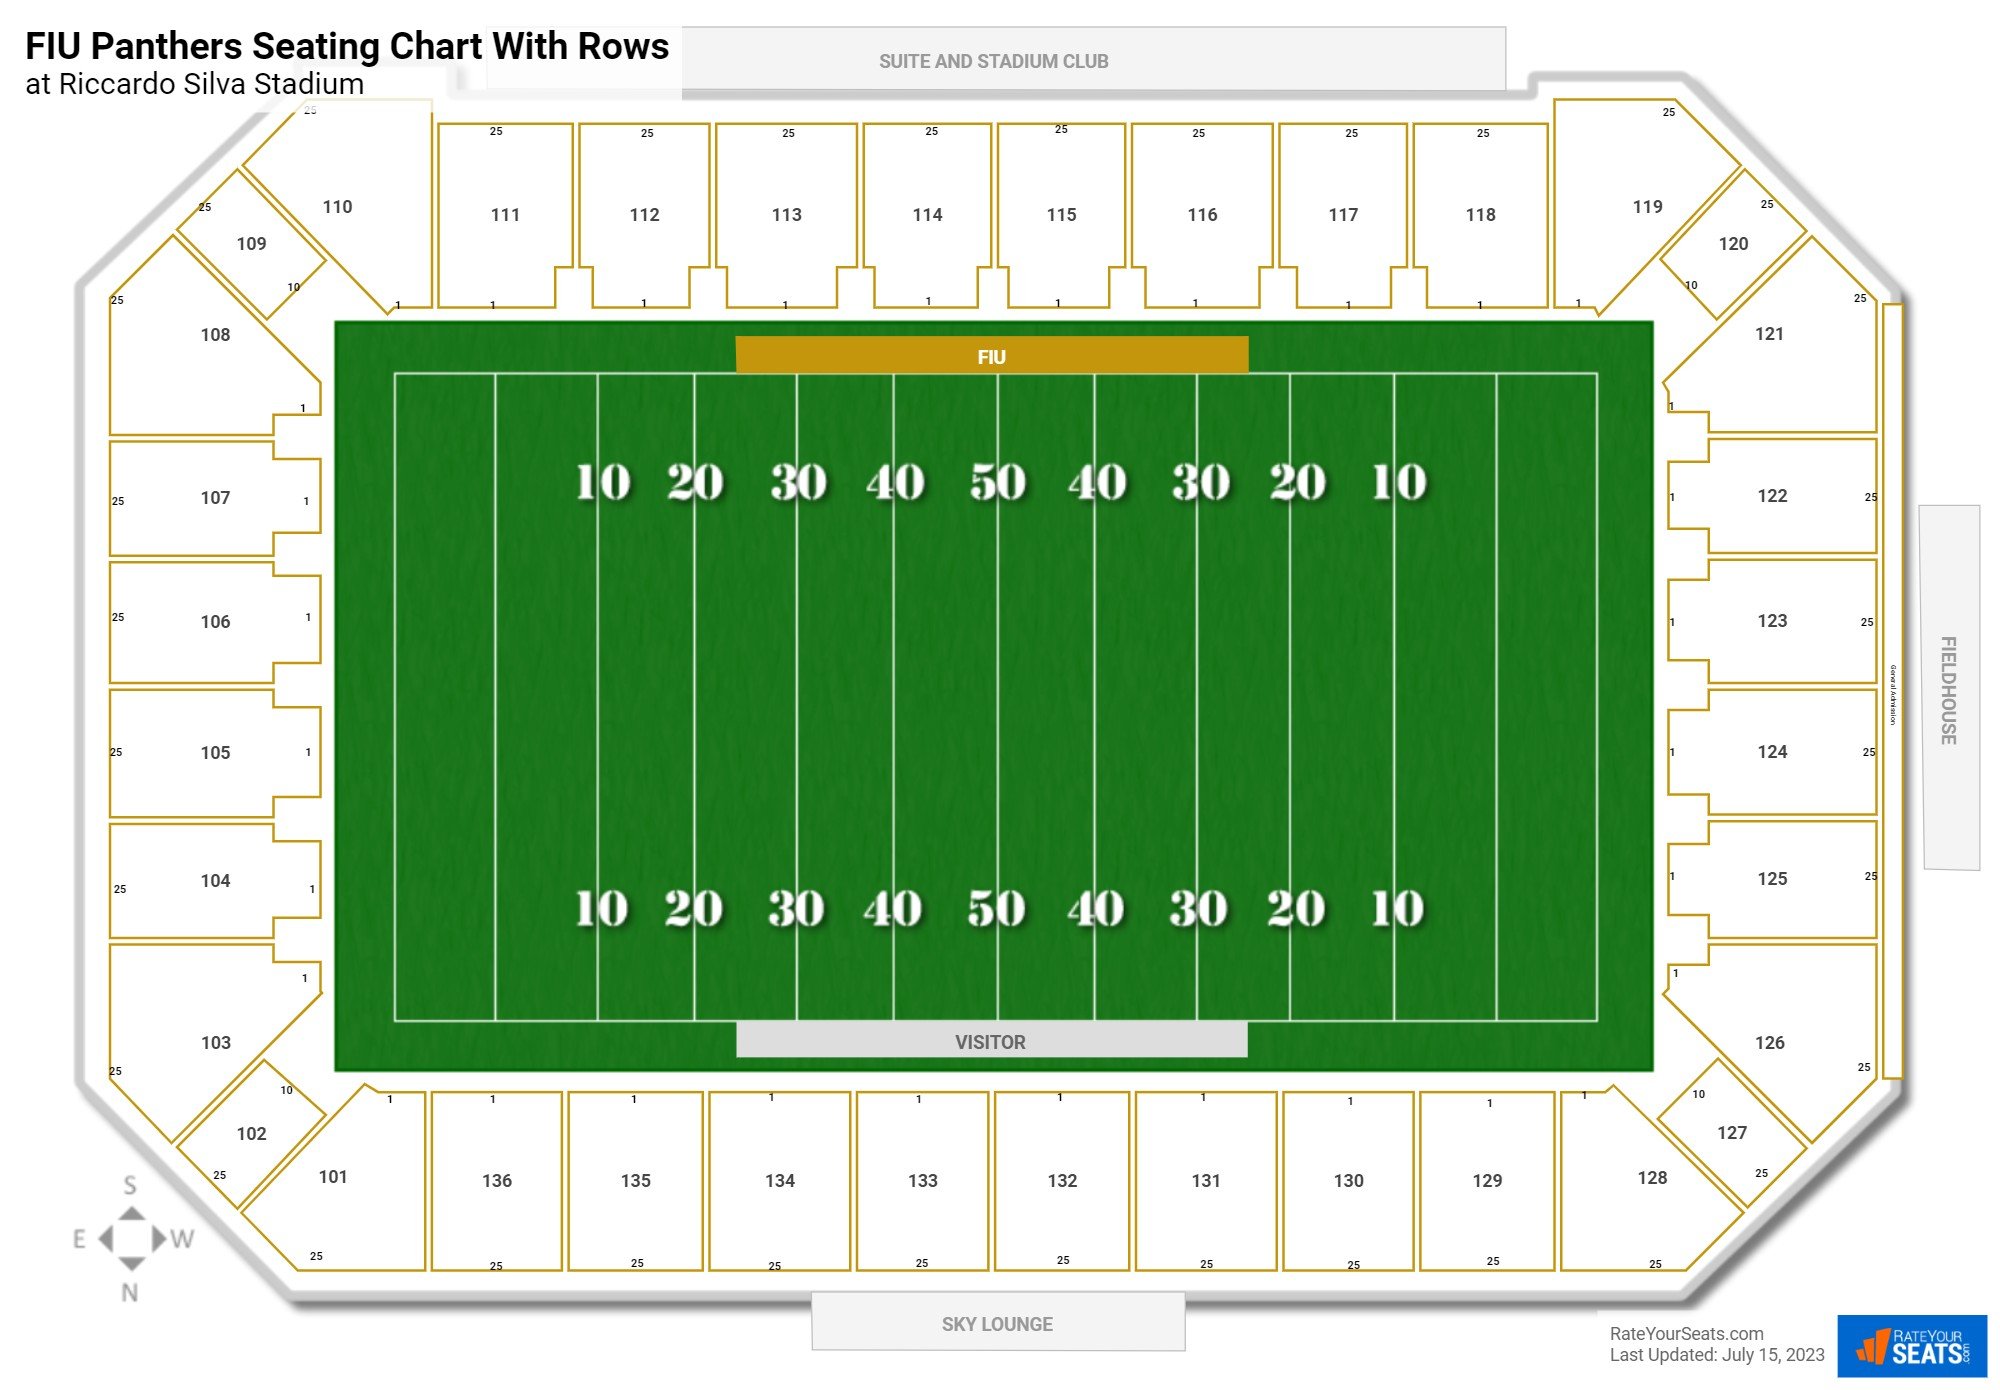 Riccardo Silva Stadium seating chart with row numbers